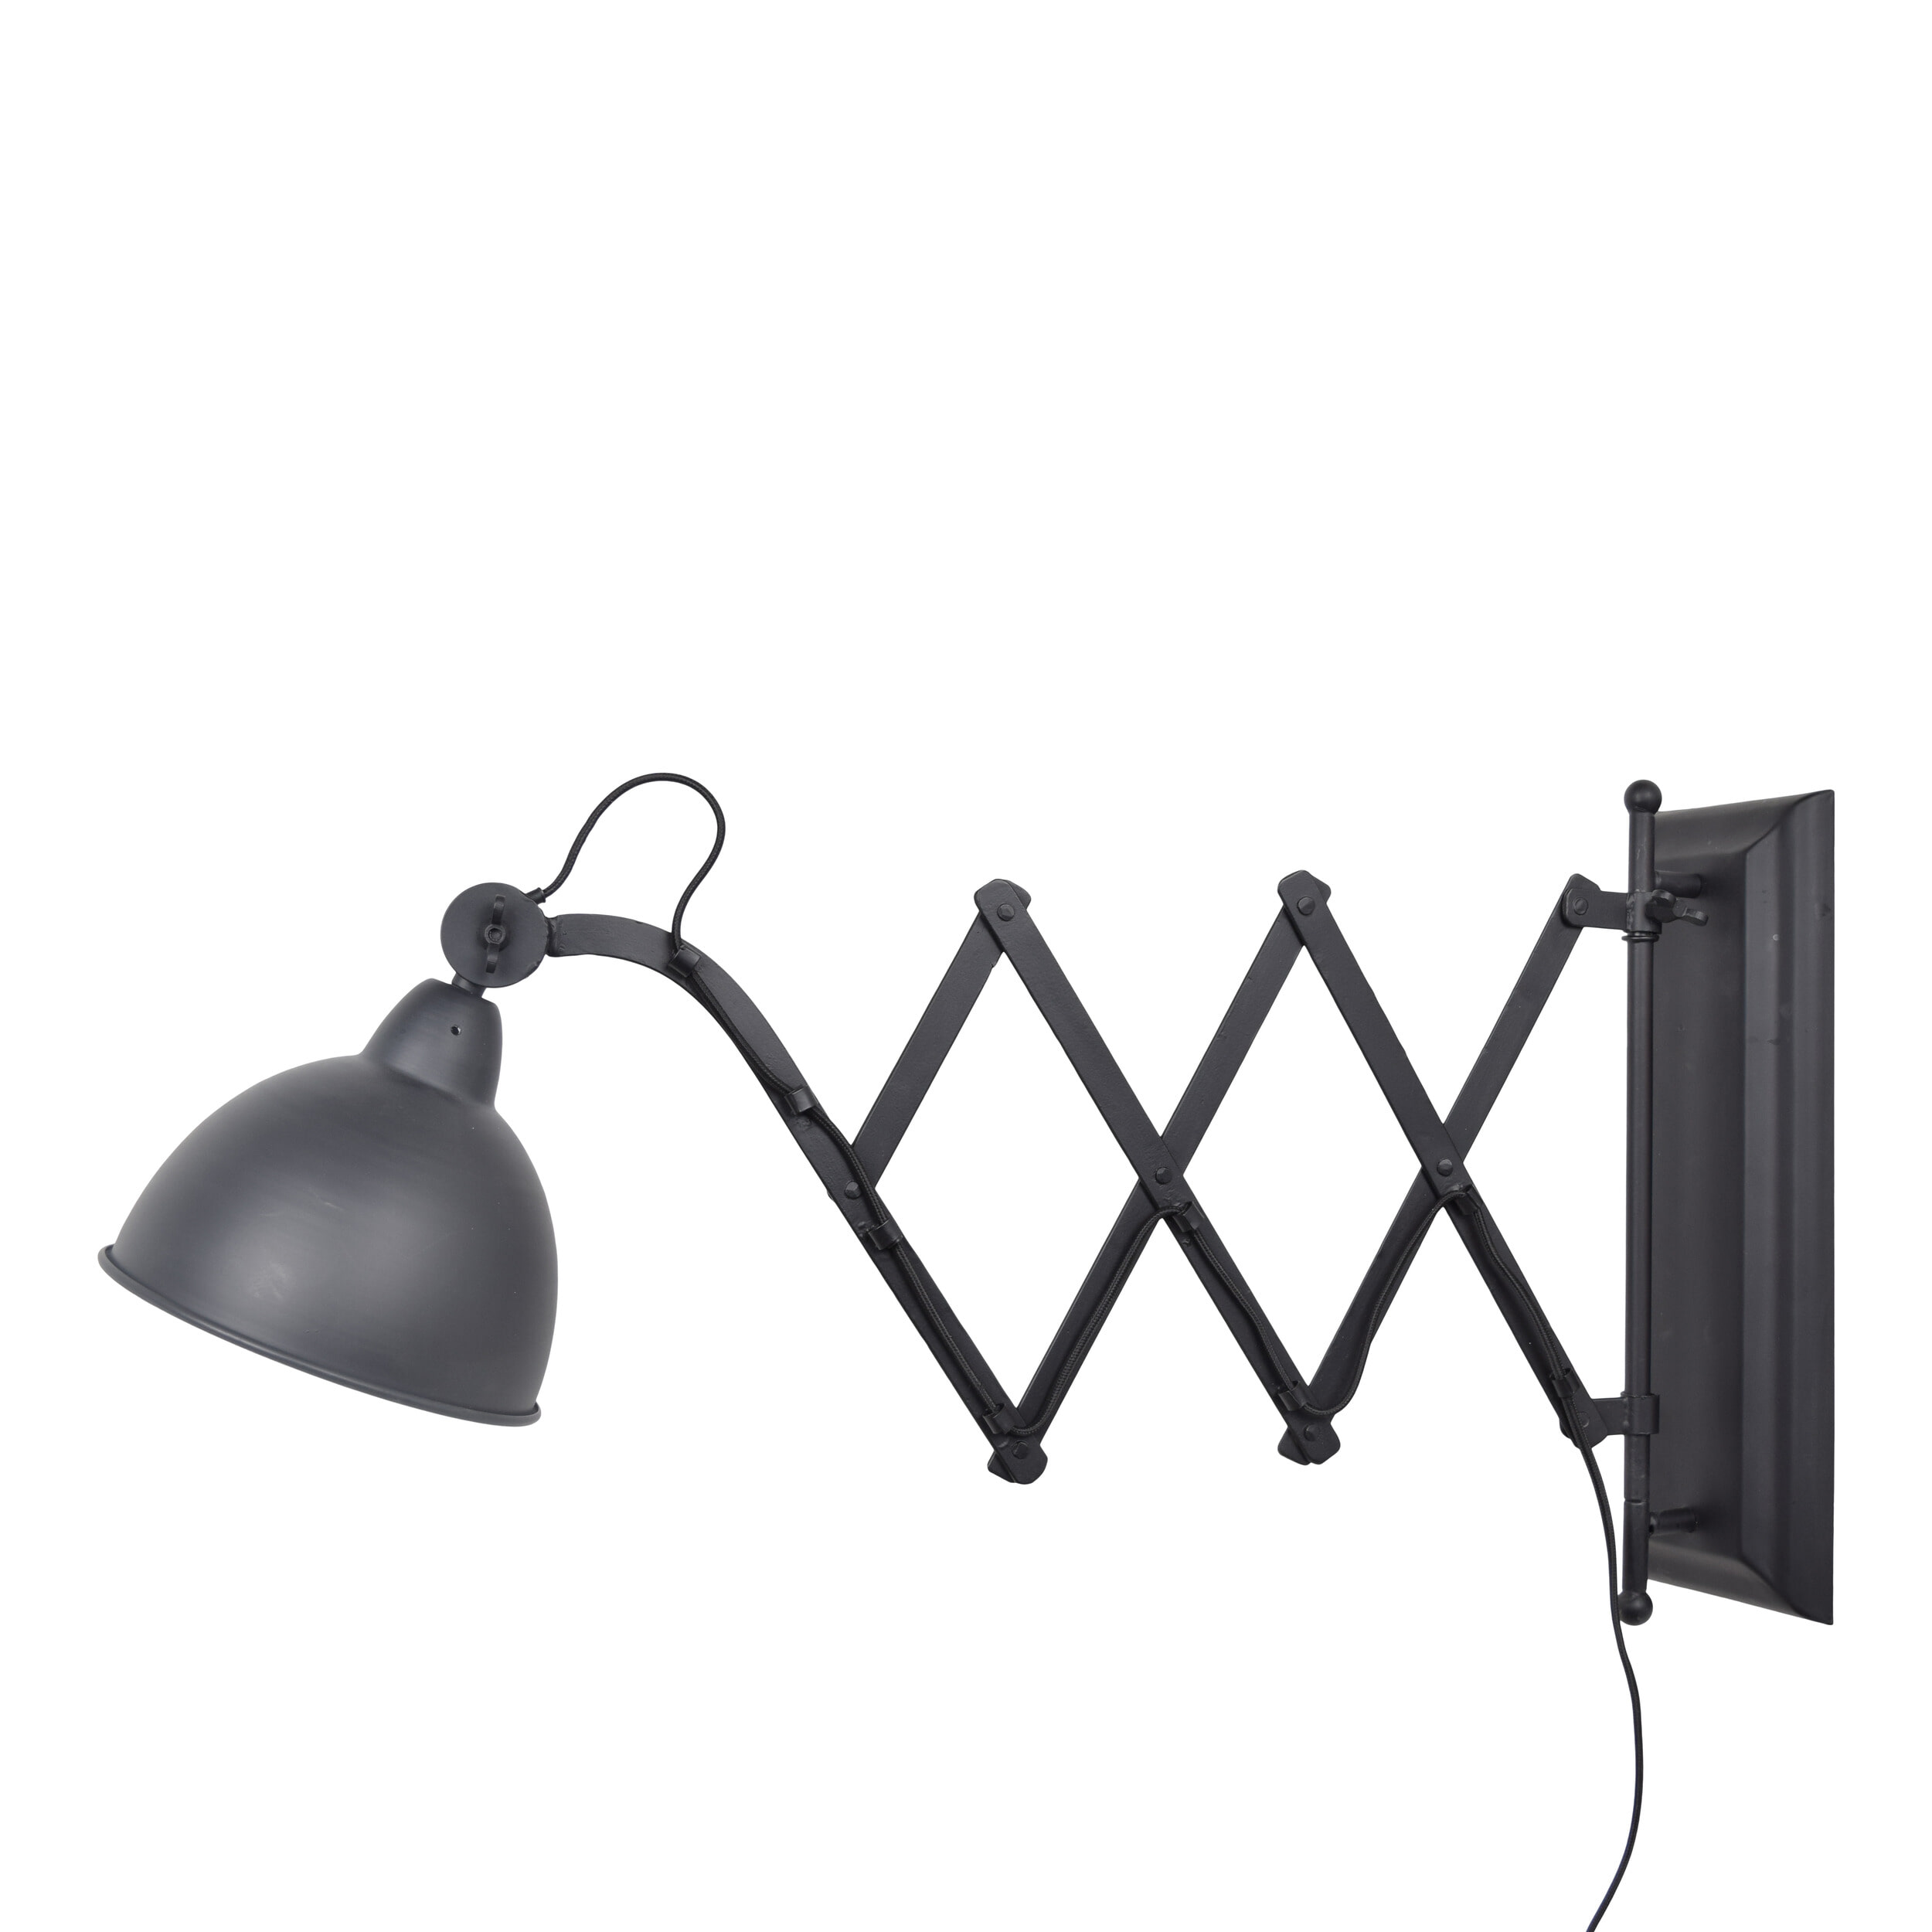 Urban Interiors wandlamp Harmonica XL Ø20, kleur Zwart